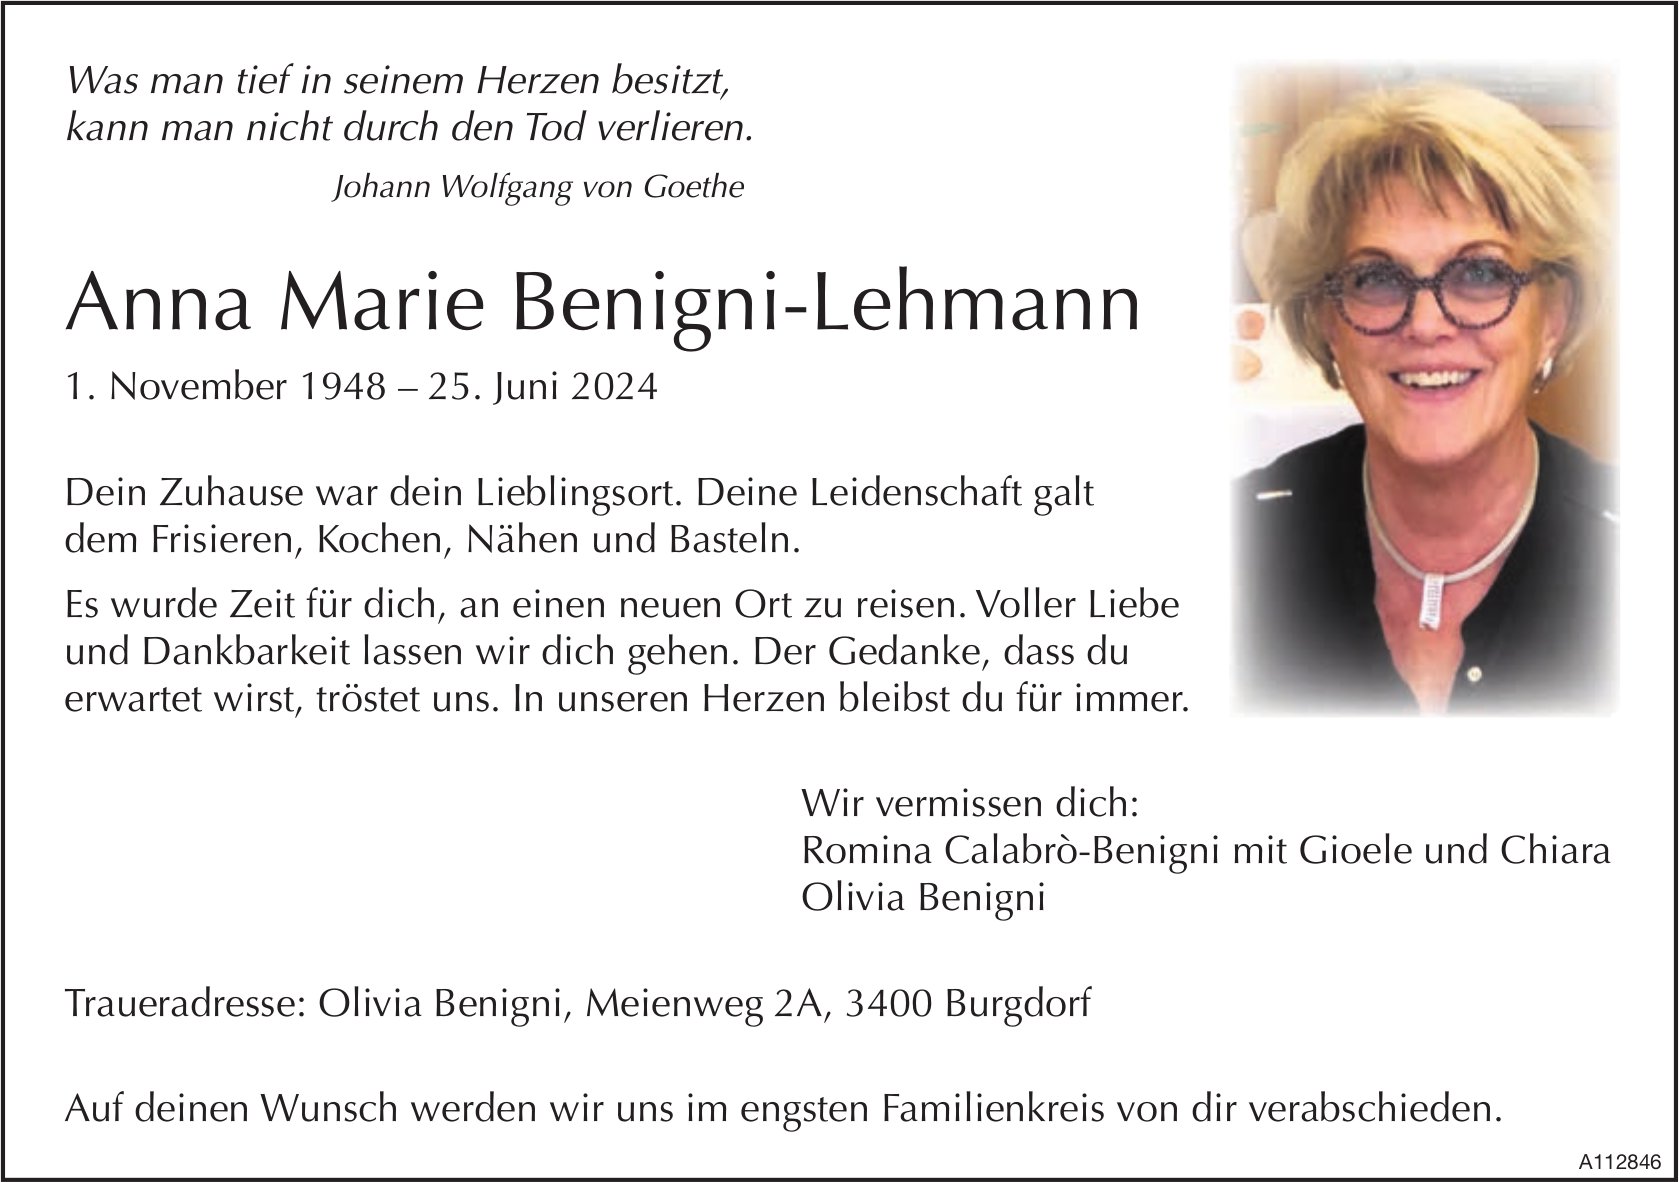 Anna Marie Benigni-Lehmann, Juni 2024 / TA